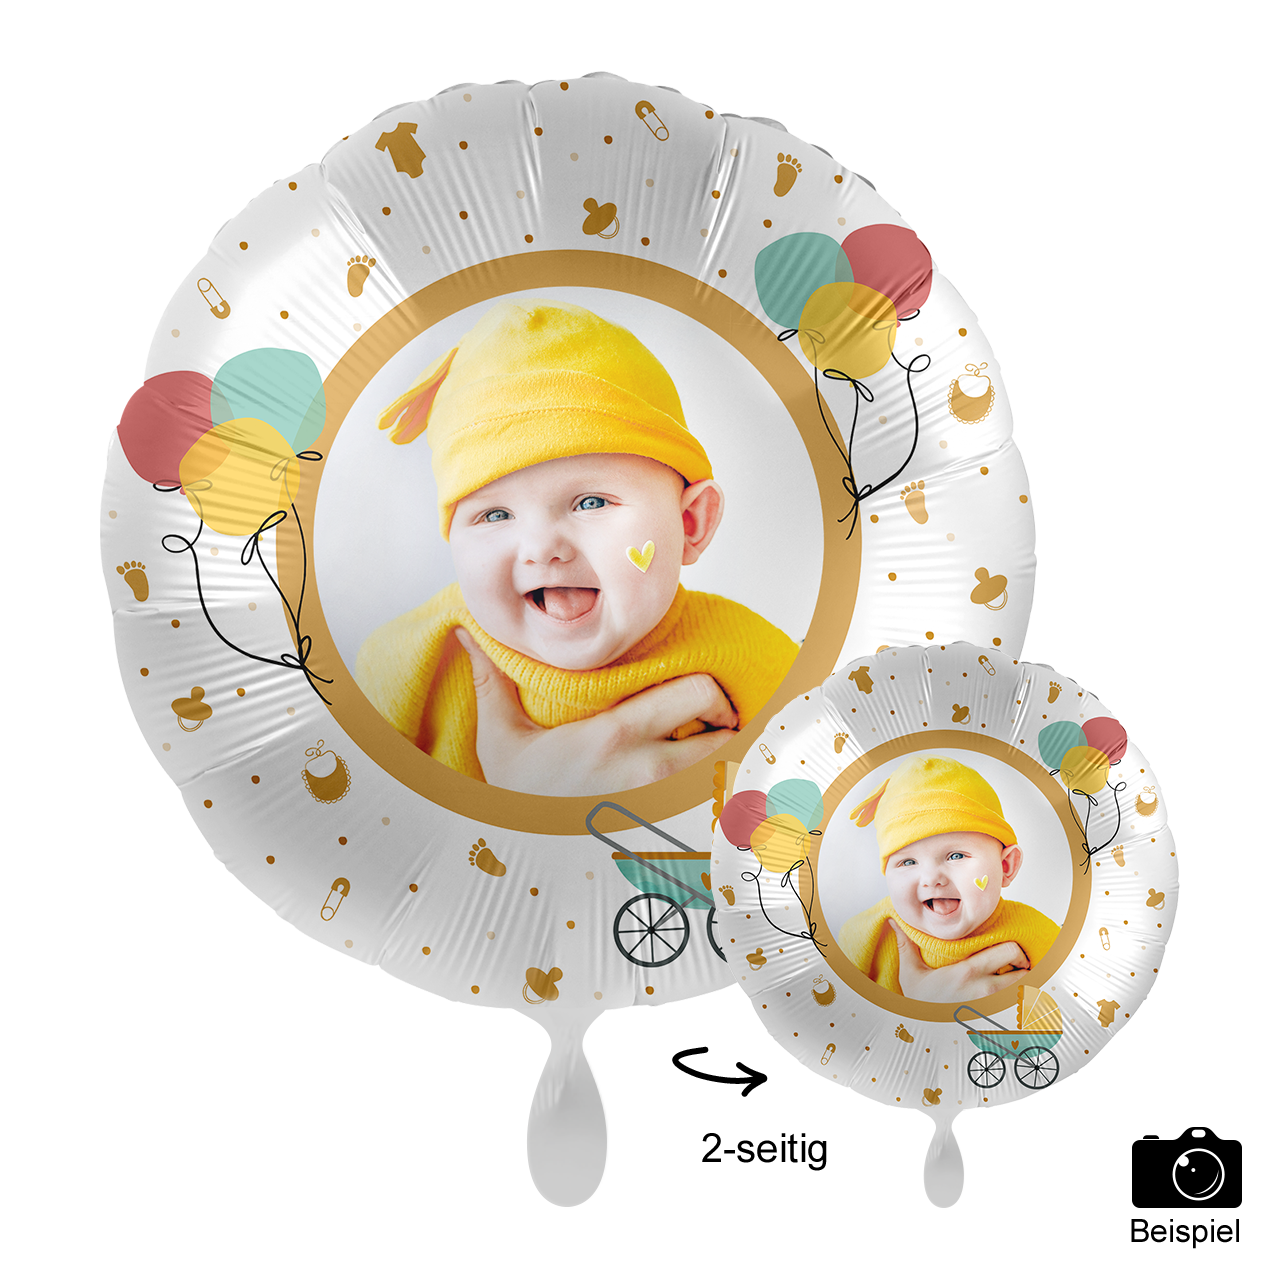 1 Ballon mit Foto - Baby Buggy